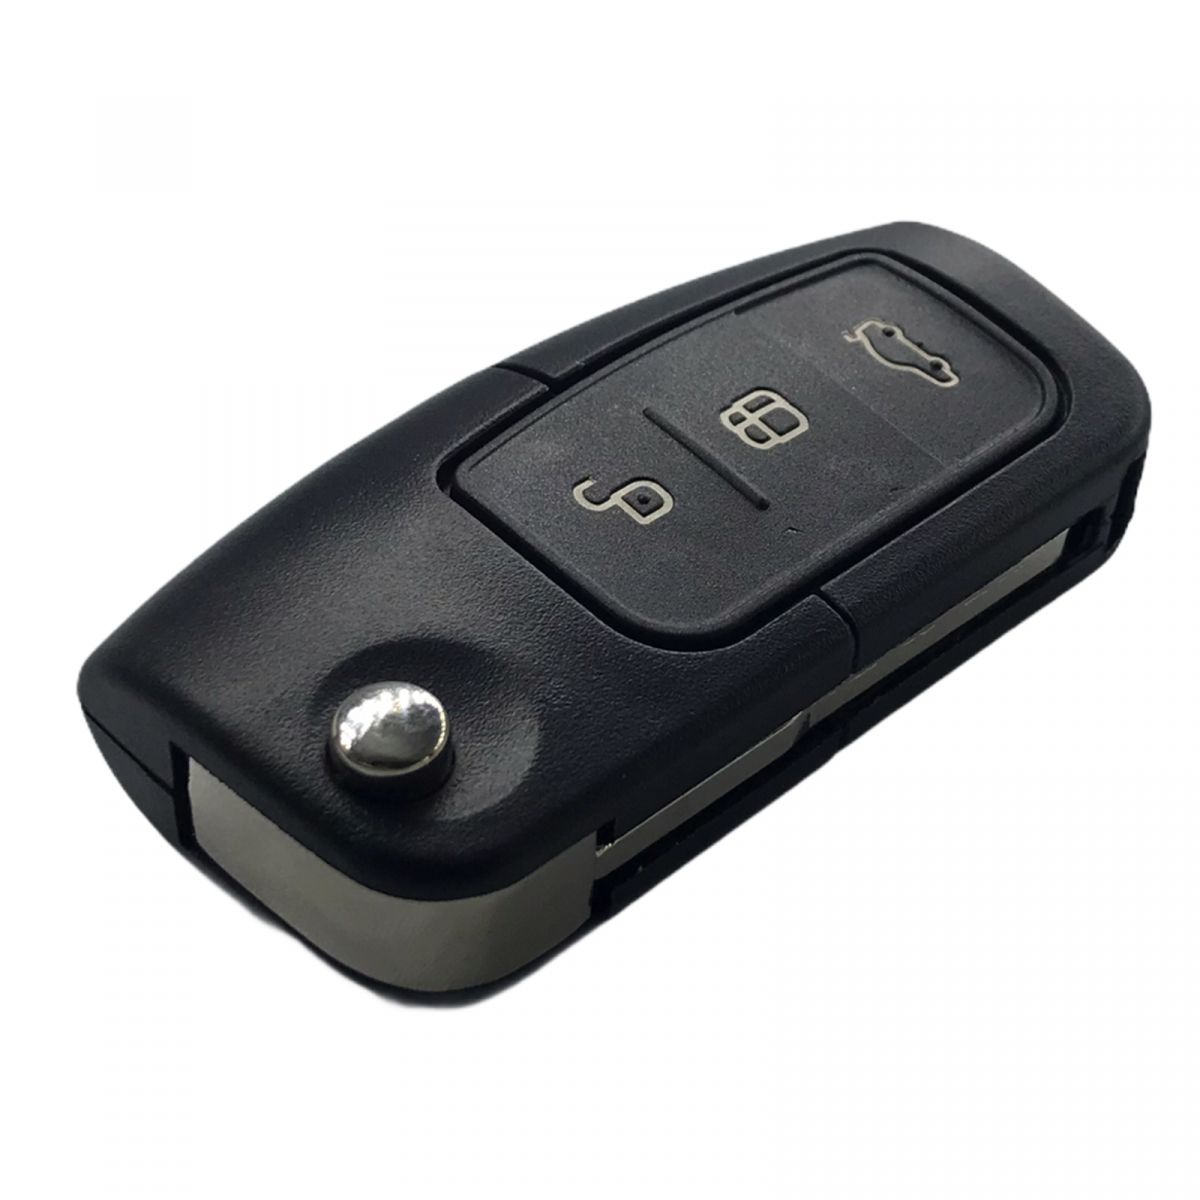 Корпус ключа Ford Focus Mondeo Fiesta C MAX на 3 кнопки